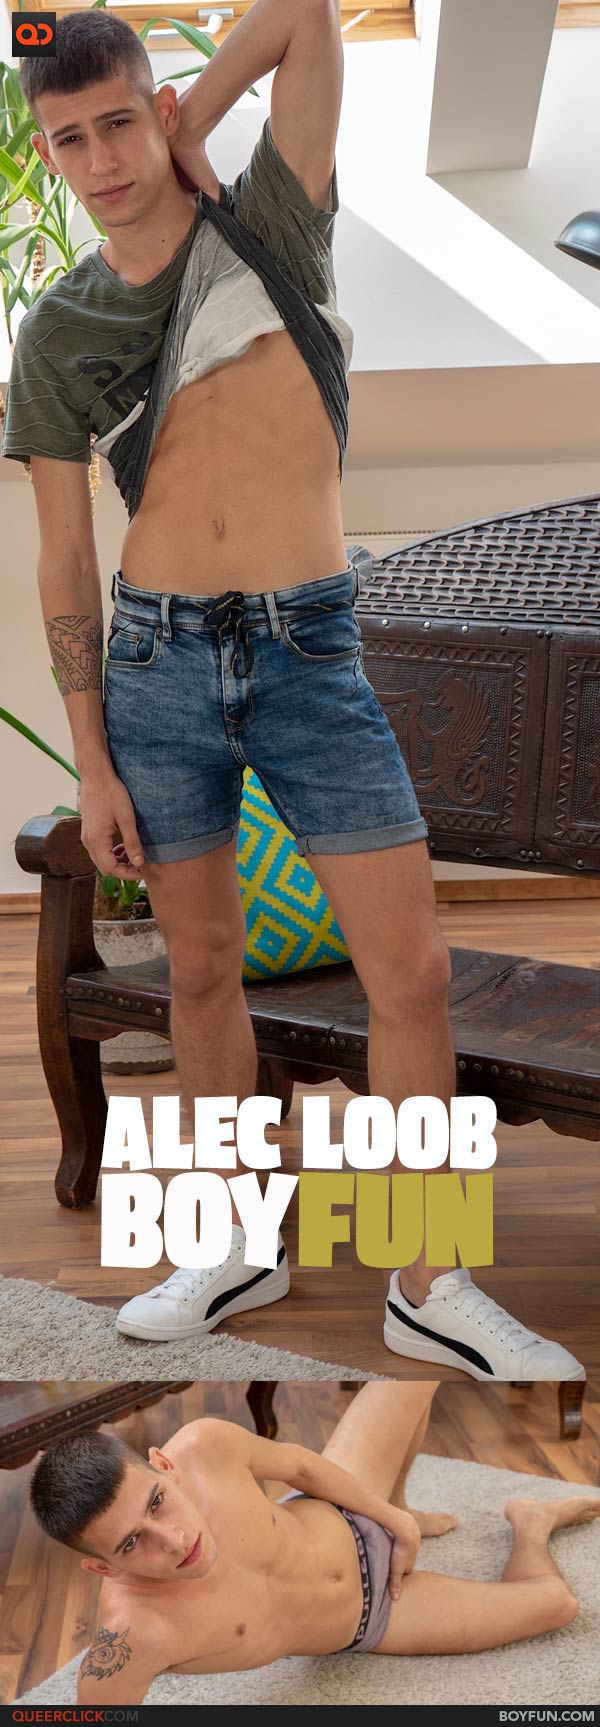 BoyFun: Alec Loob